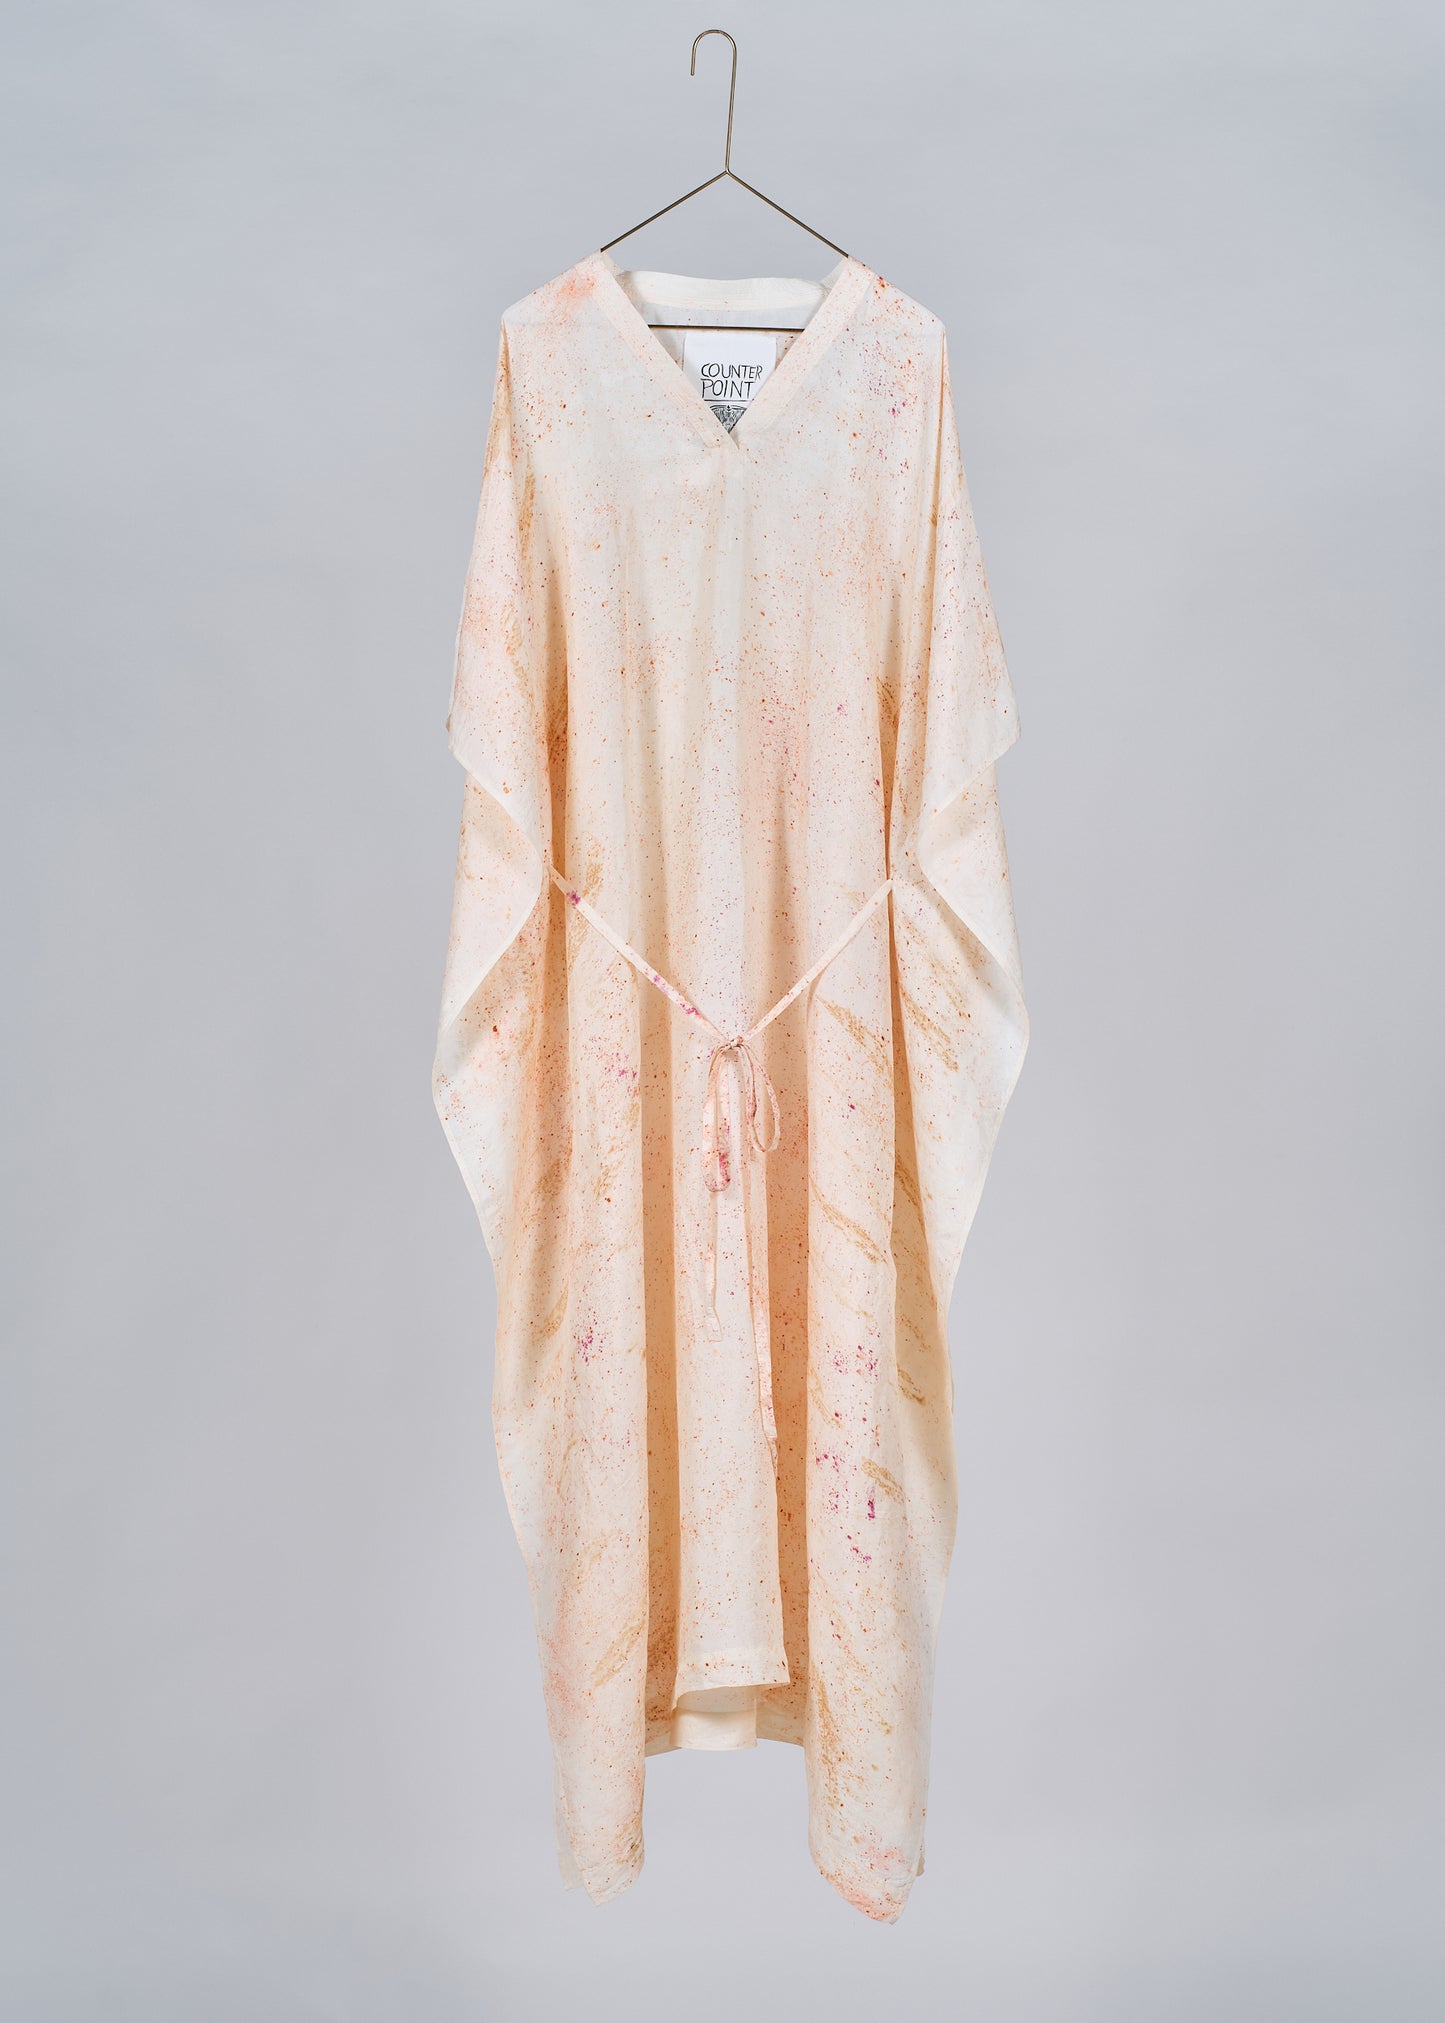 HEGO DYE / handloom silk | JAPONAISERIE＃4